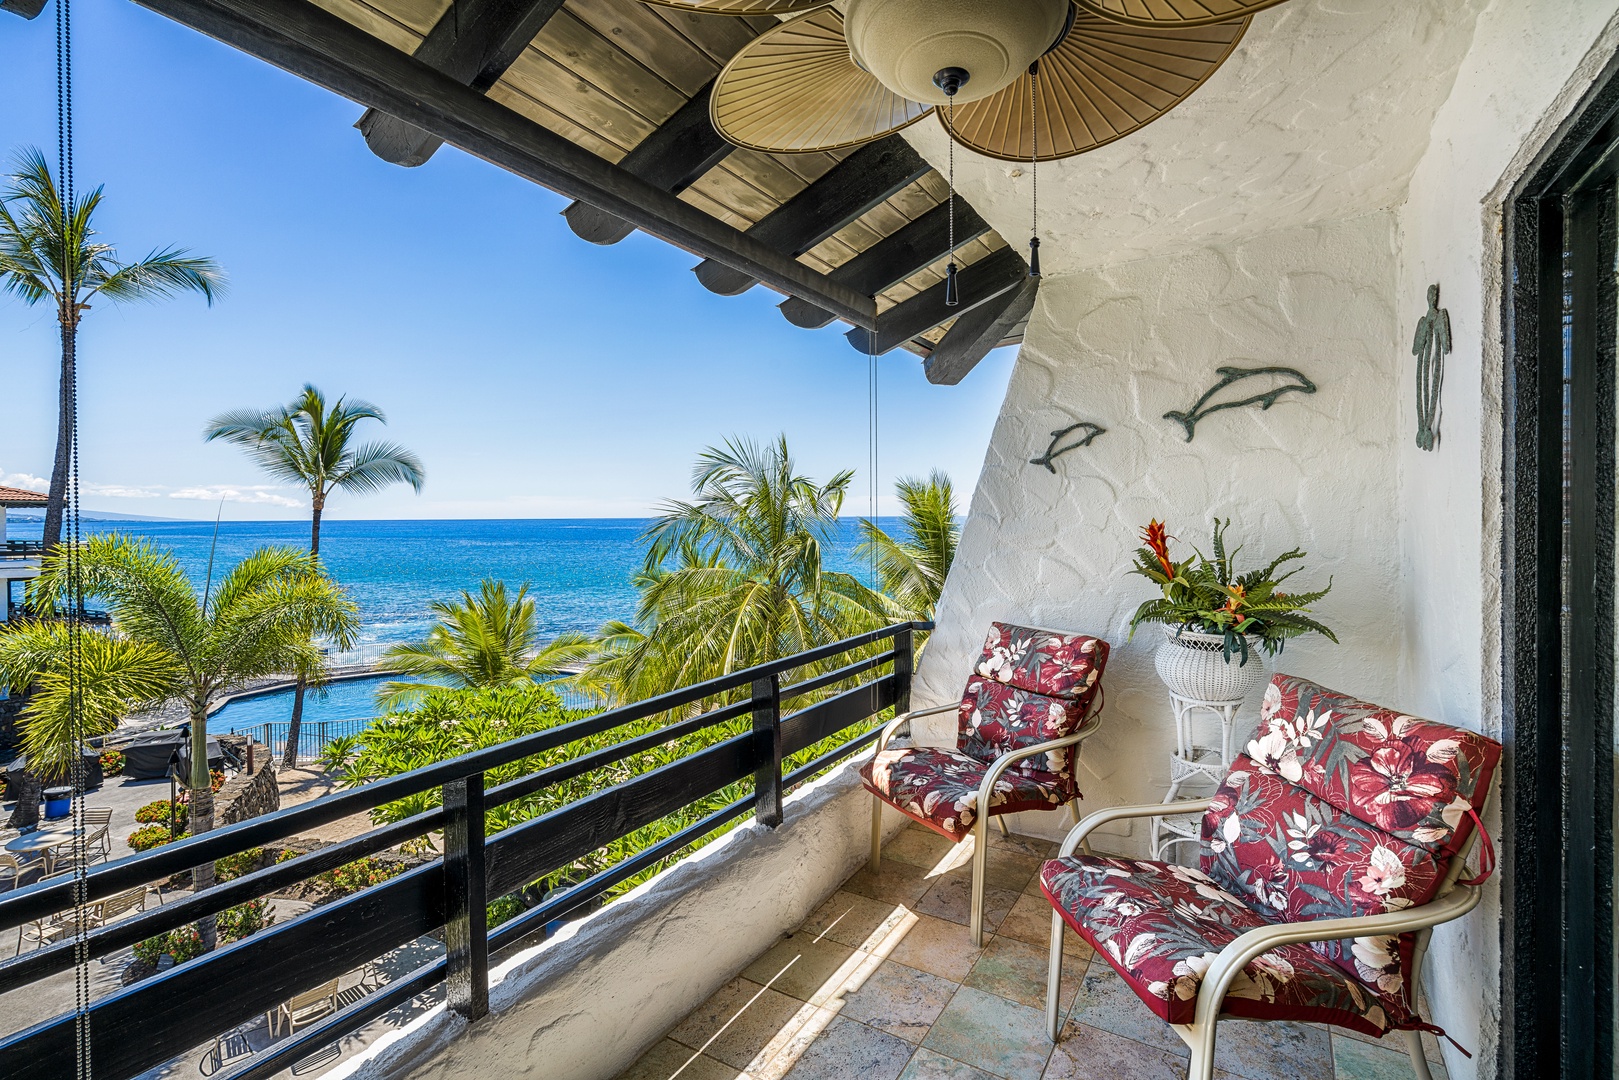 Kailua Kona Vacation Rentals, Casa De Emdeko 336 - Relax and watch the ocean activity right in front of your eyes!